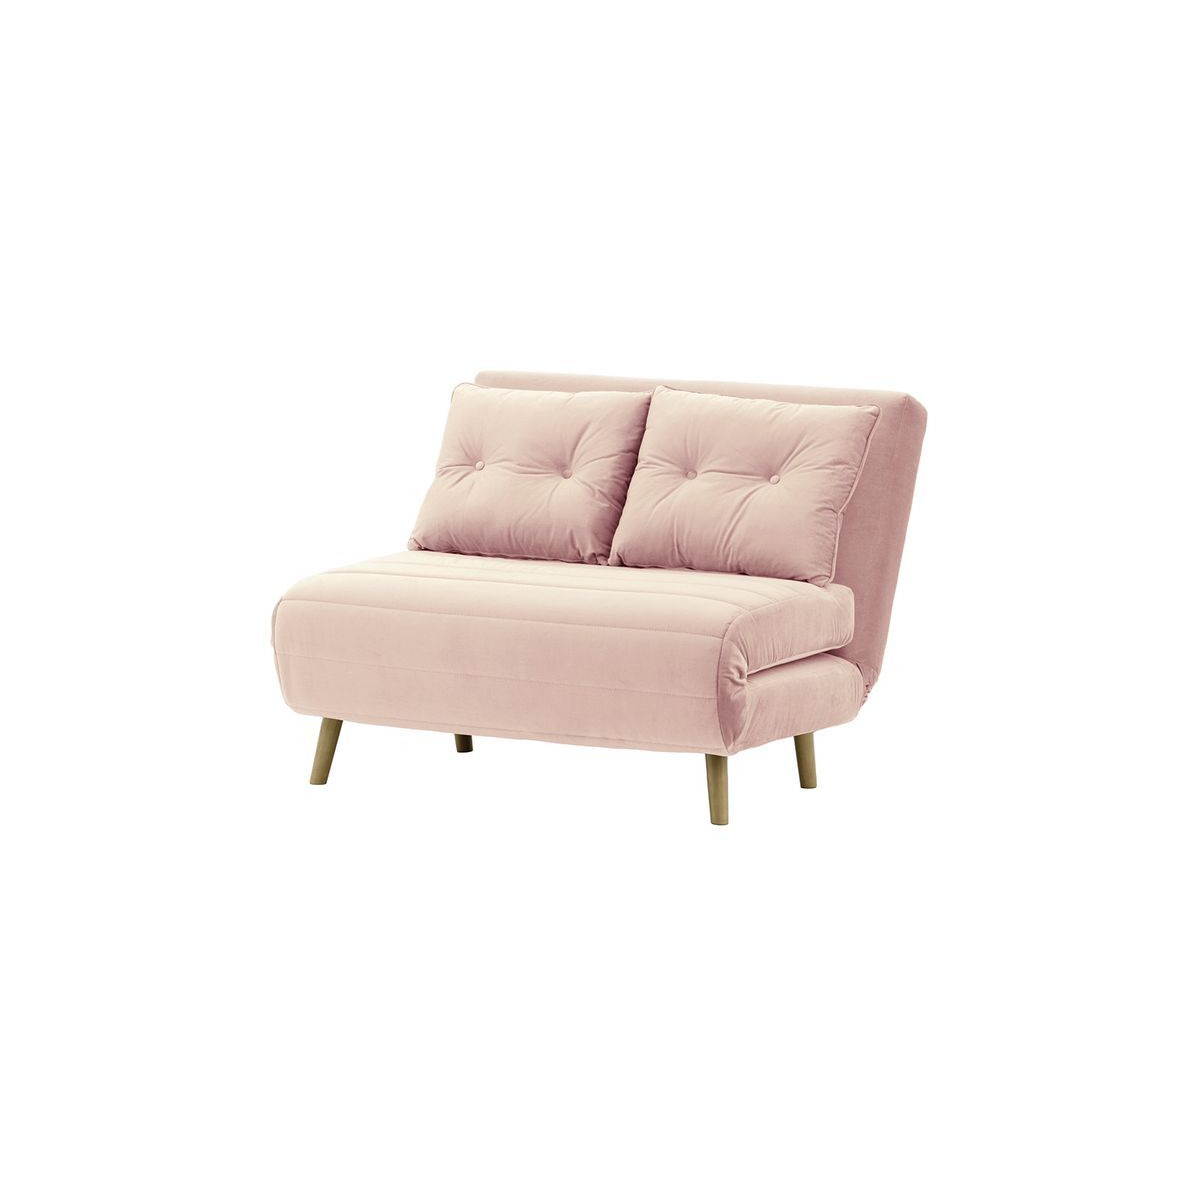 Flic Small Sofa Bed - width 103 cm, lilac, Leg colour: wax black - image 1